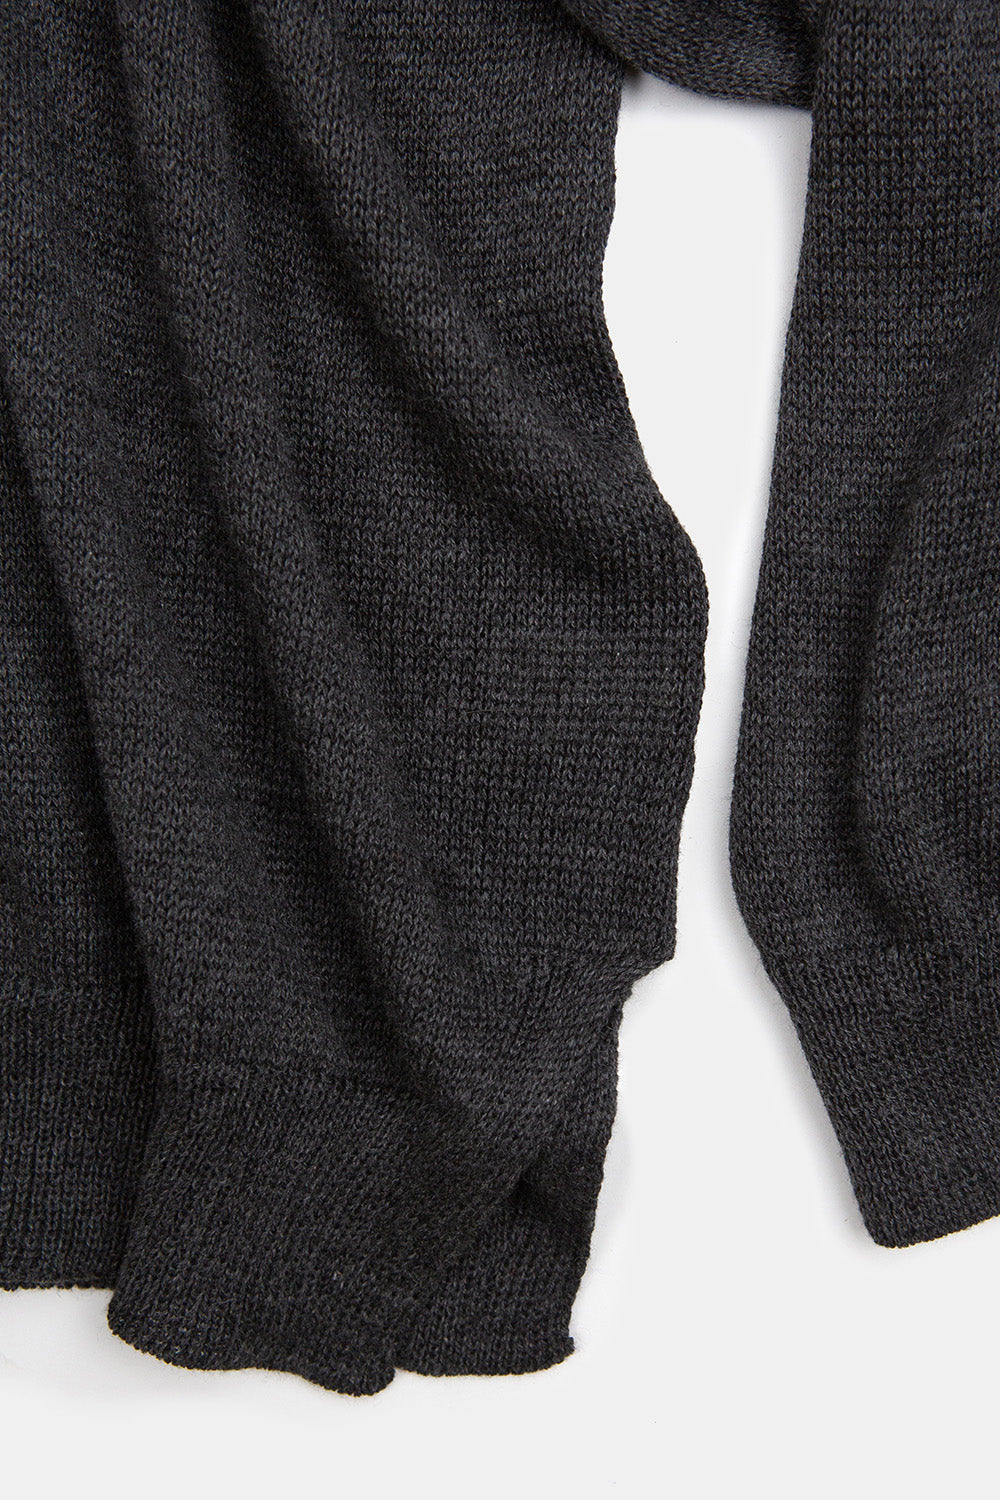 Pima Cotton V Neck Pullover in Charcoal